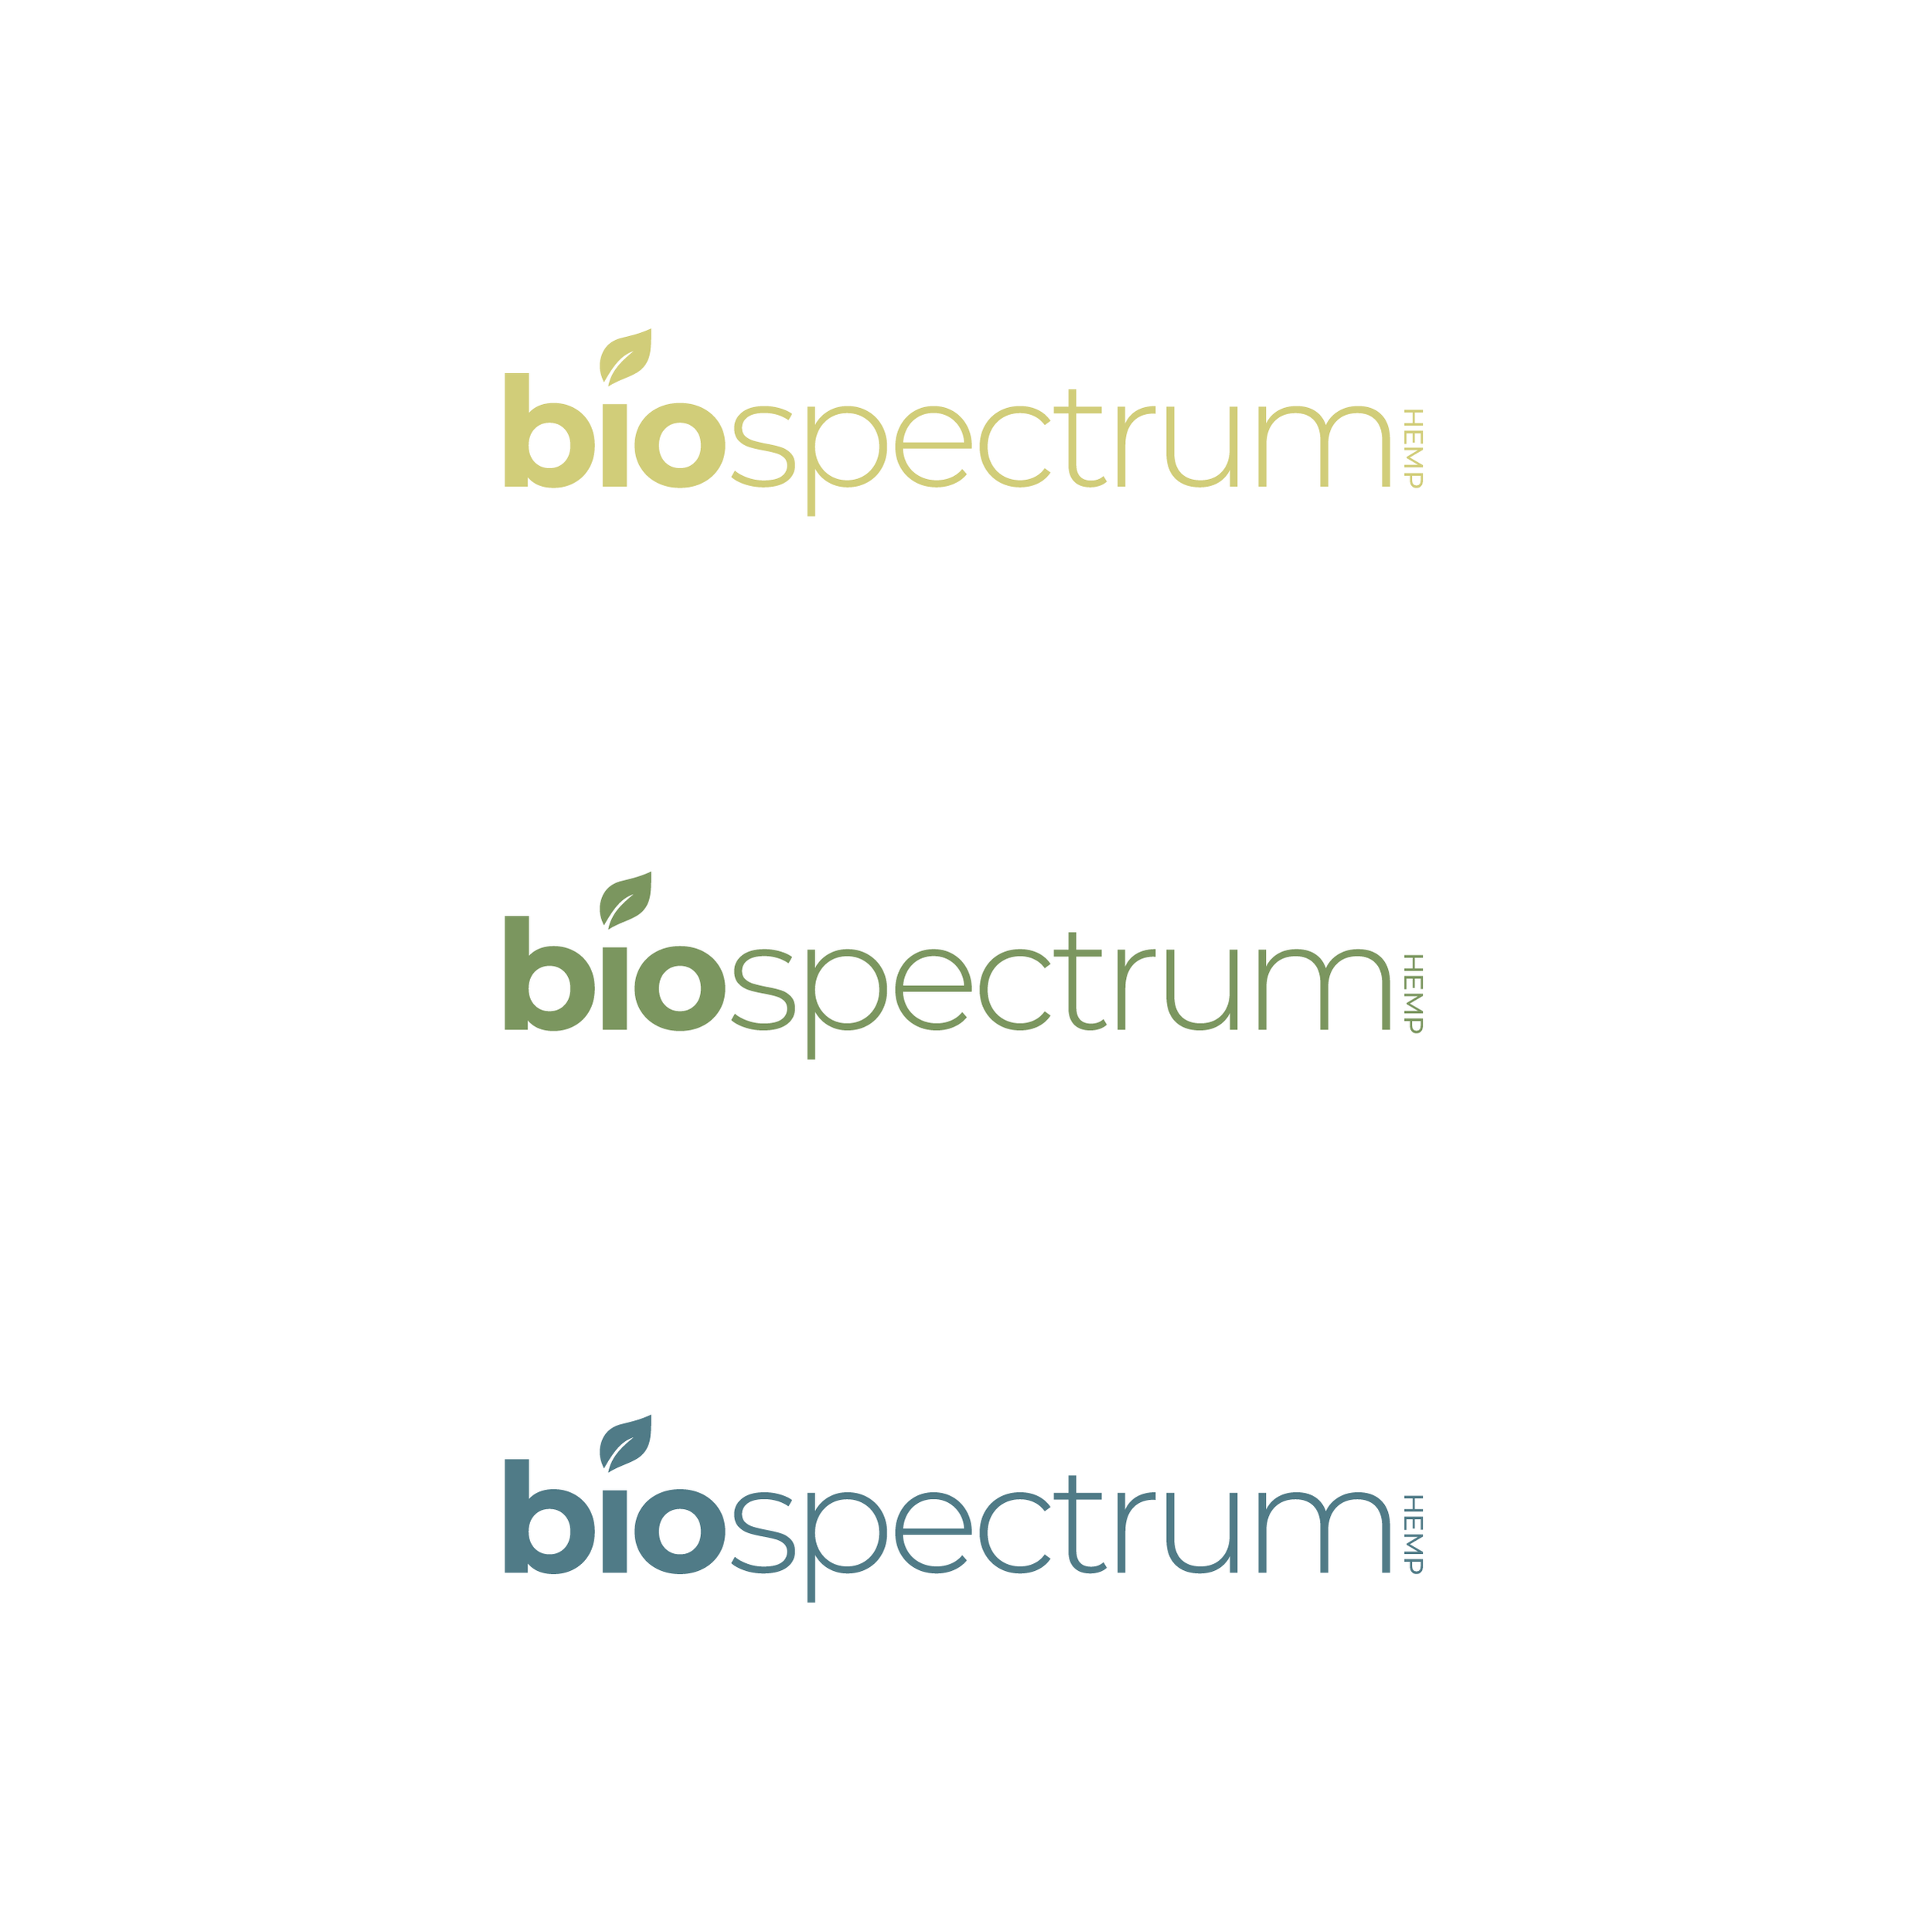 BioSpectrum Proposed new logo-02.png